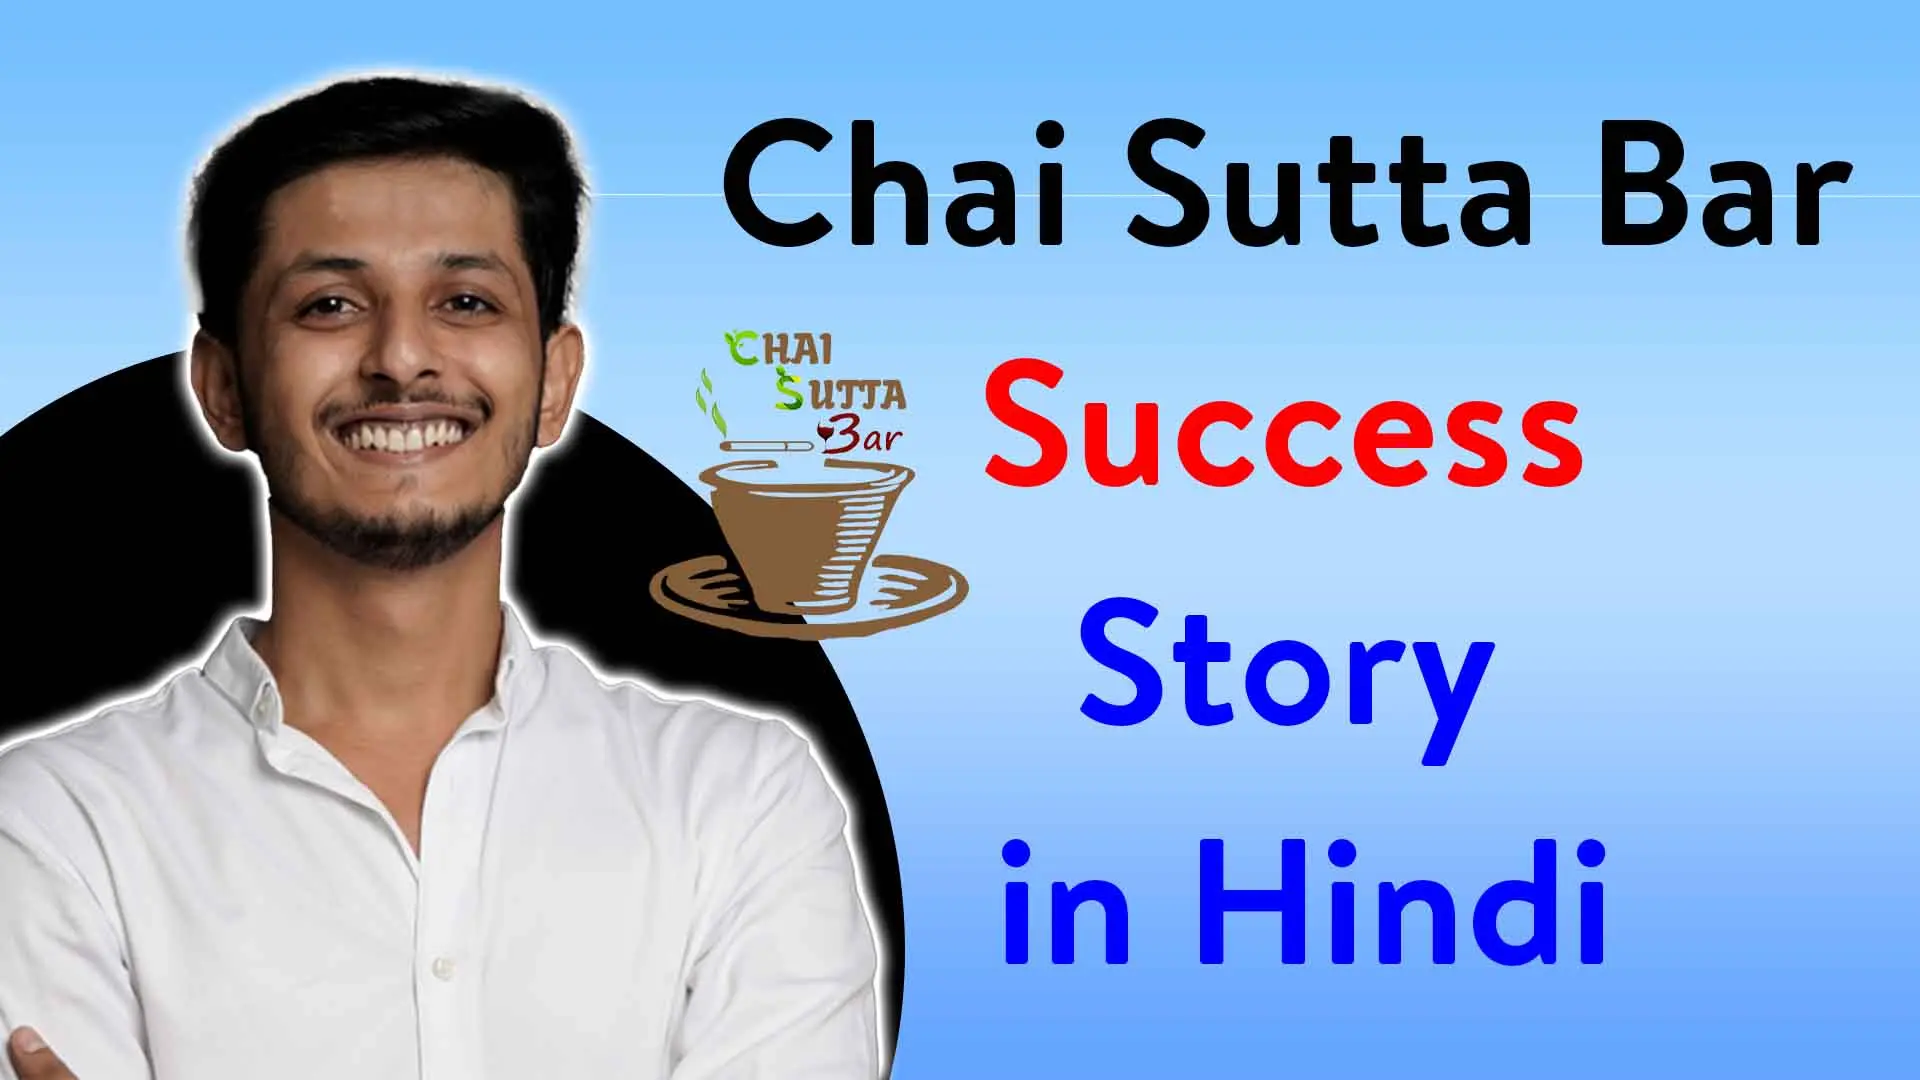 Anubhav dubey (Chai sutta bar) Biography, age, gilrfriend, family, income, net worth.